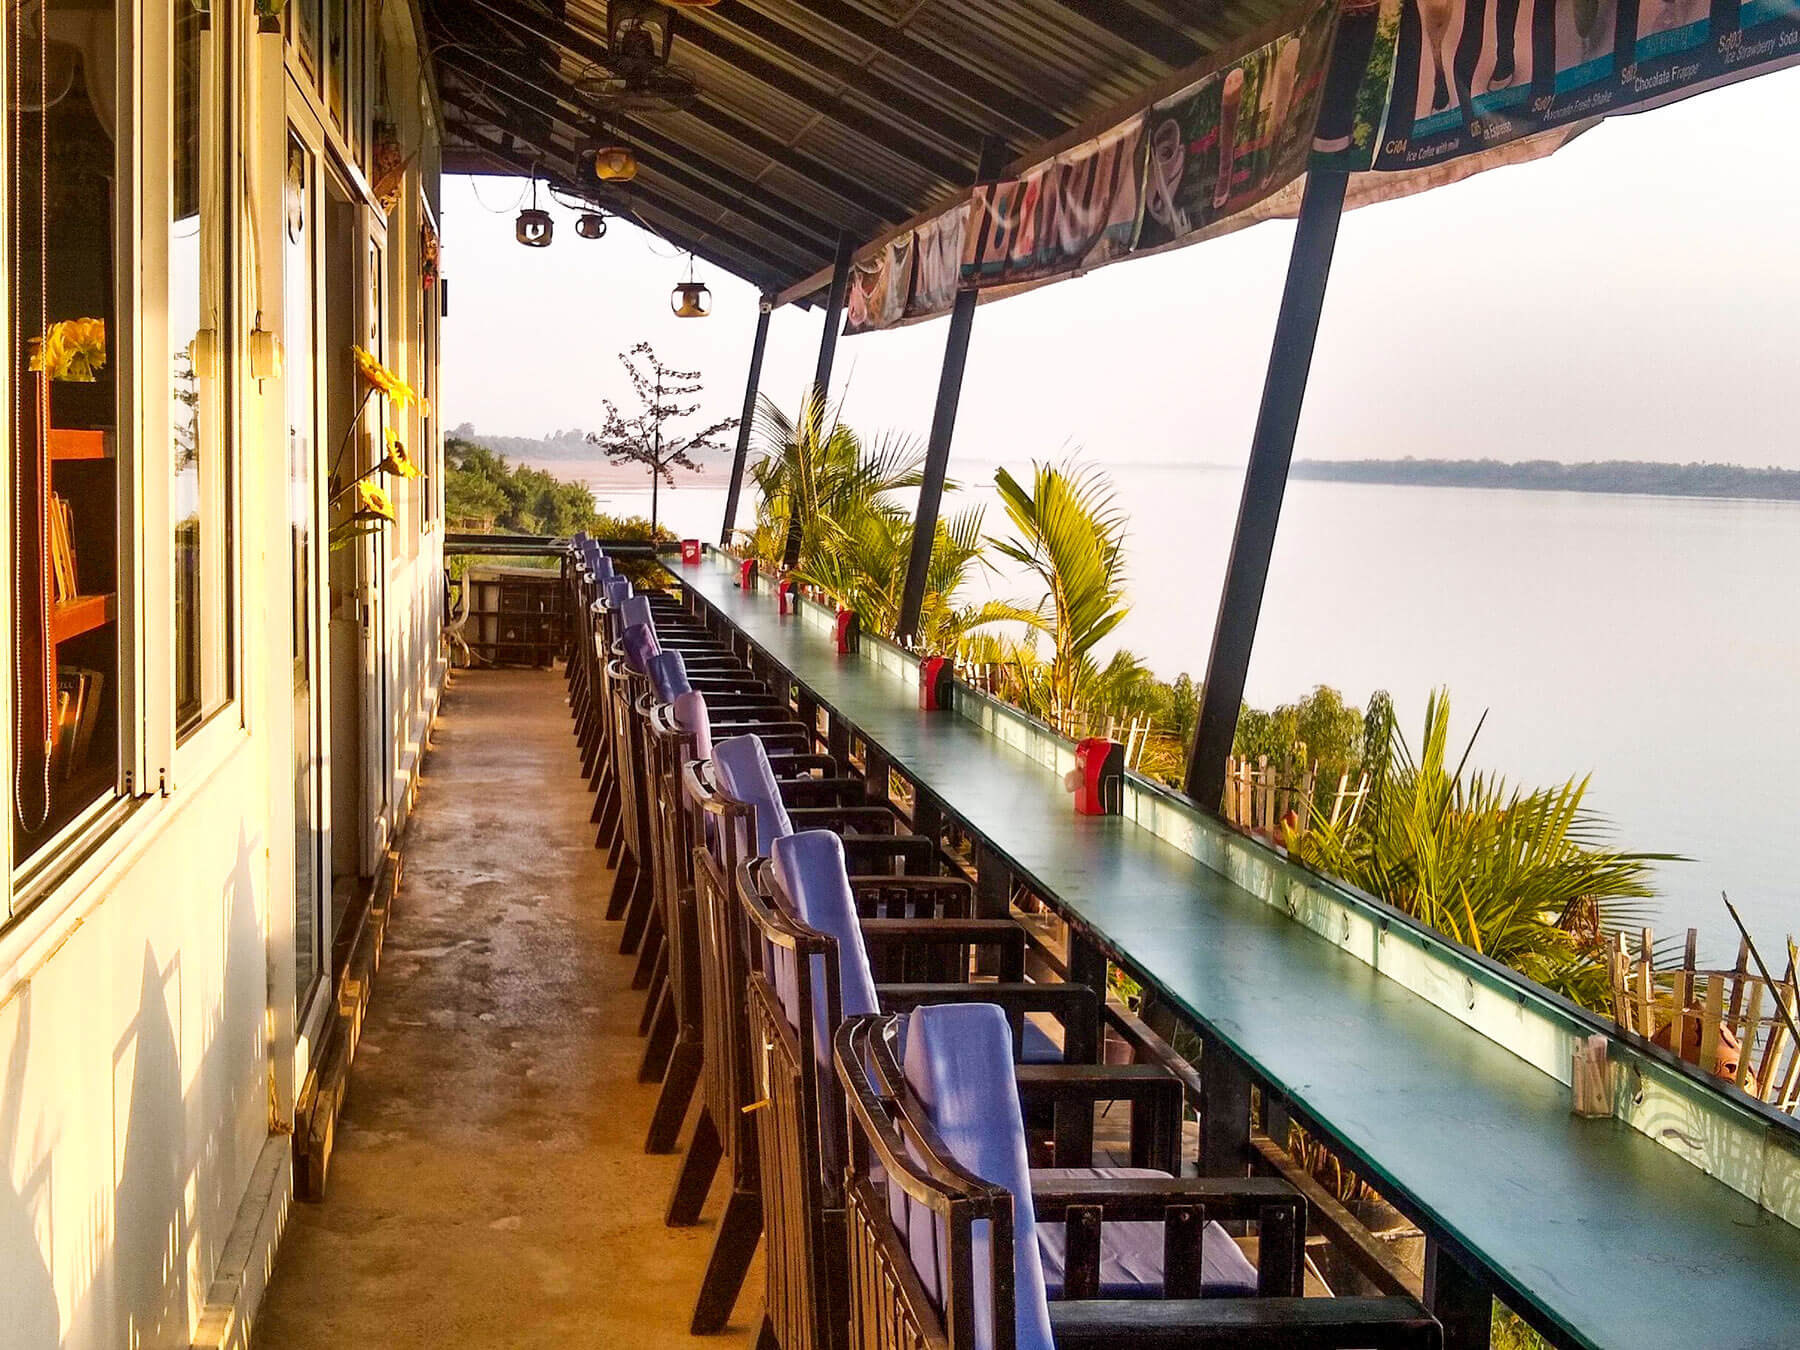 Restaurant Terrasse am Mekong Fluss in der Provinz Kratie, Kambodscha